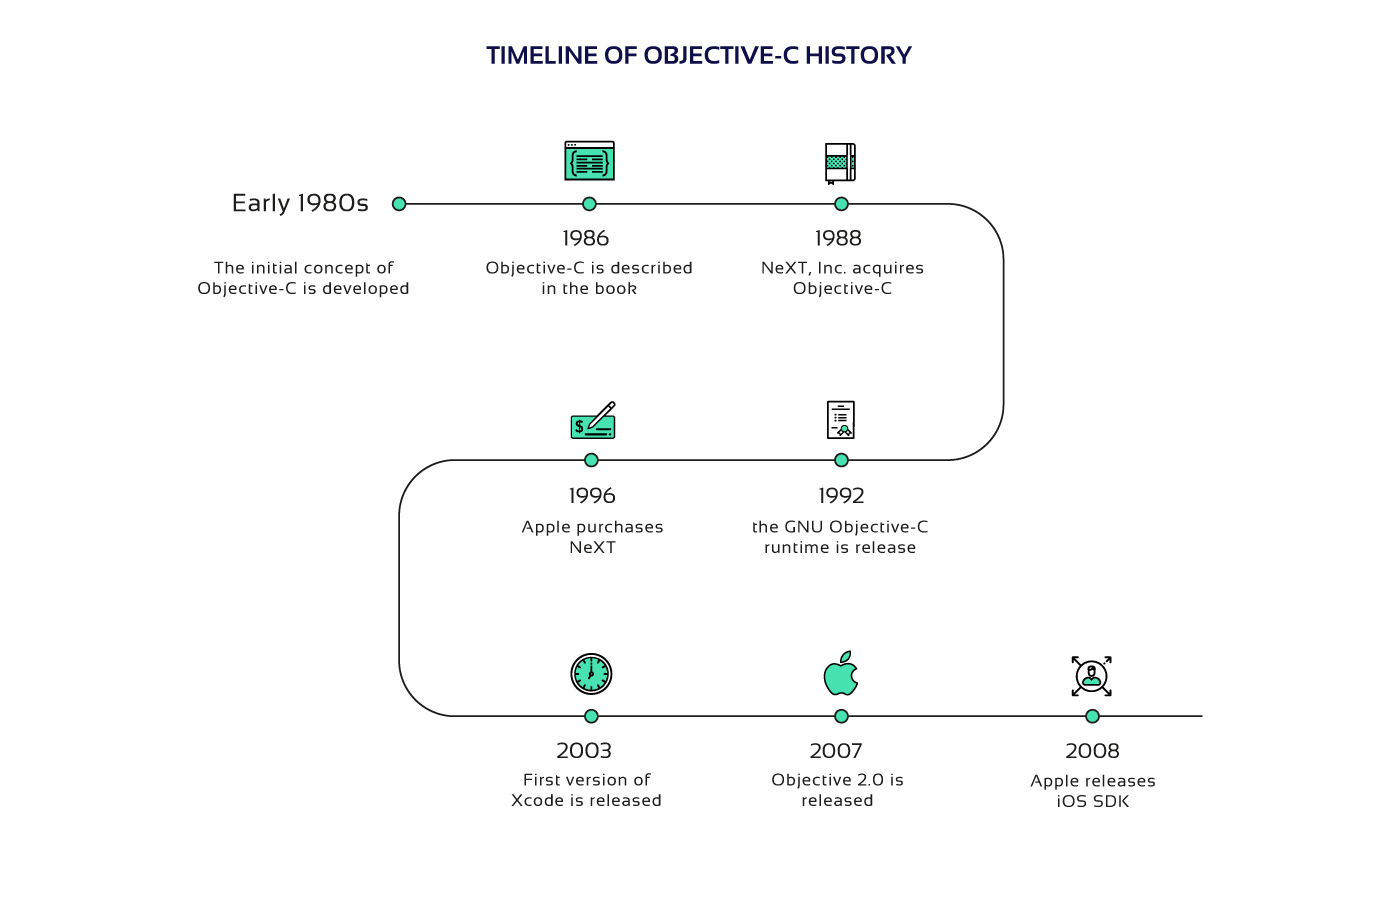 Objective-C timeline